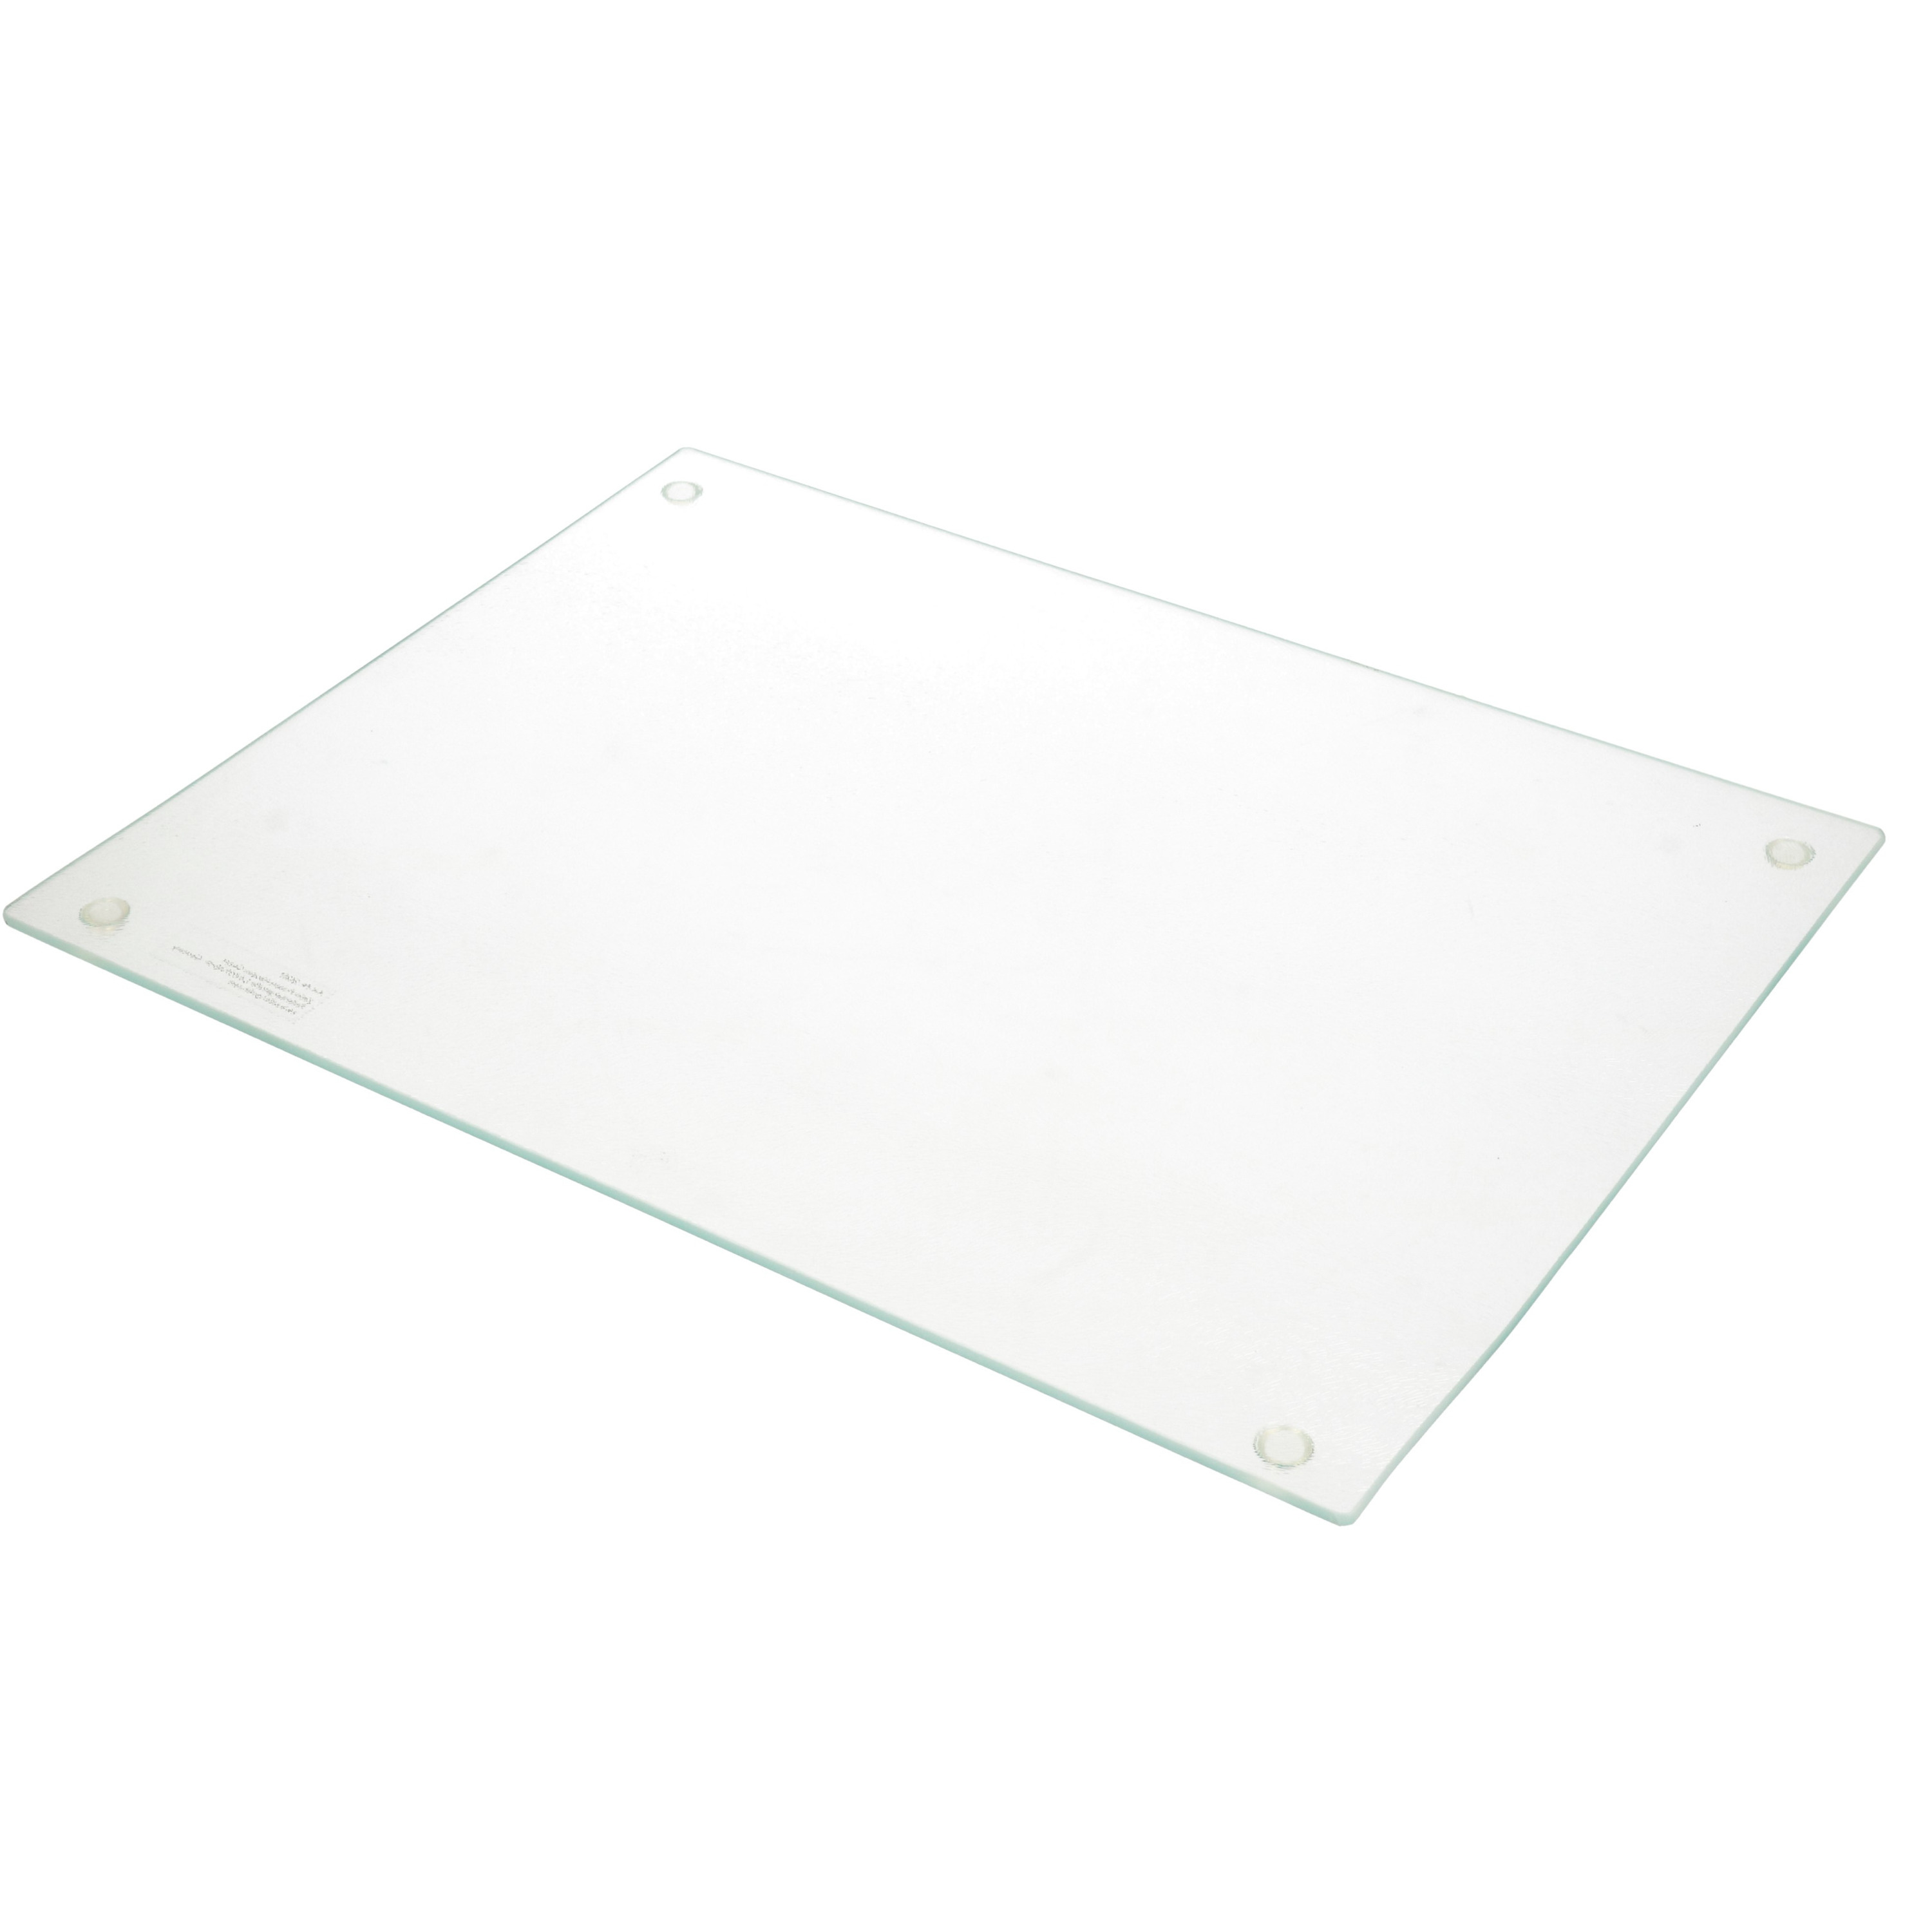 Glazen snijplank met siliconen voetjes 30 x 40 cm